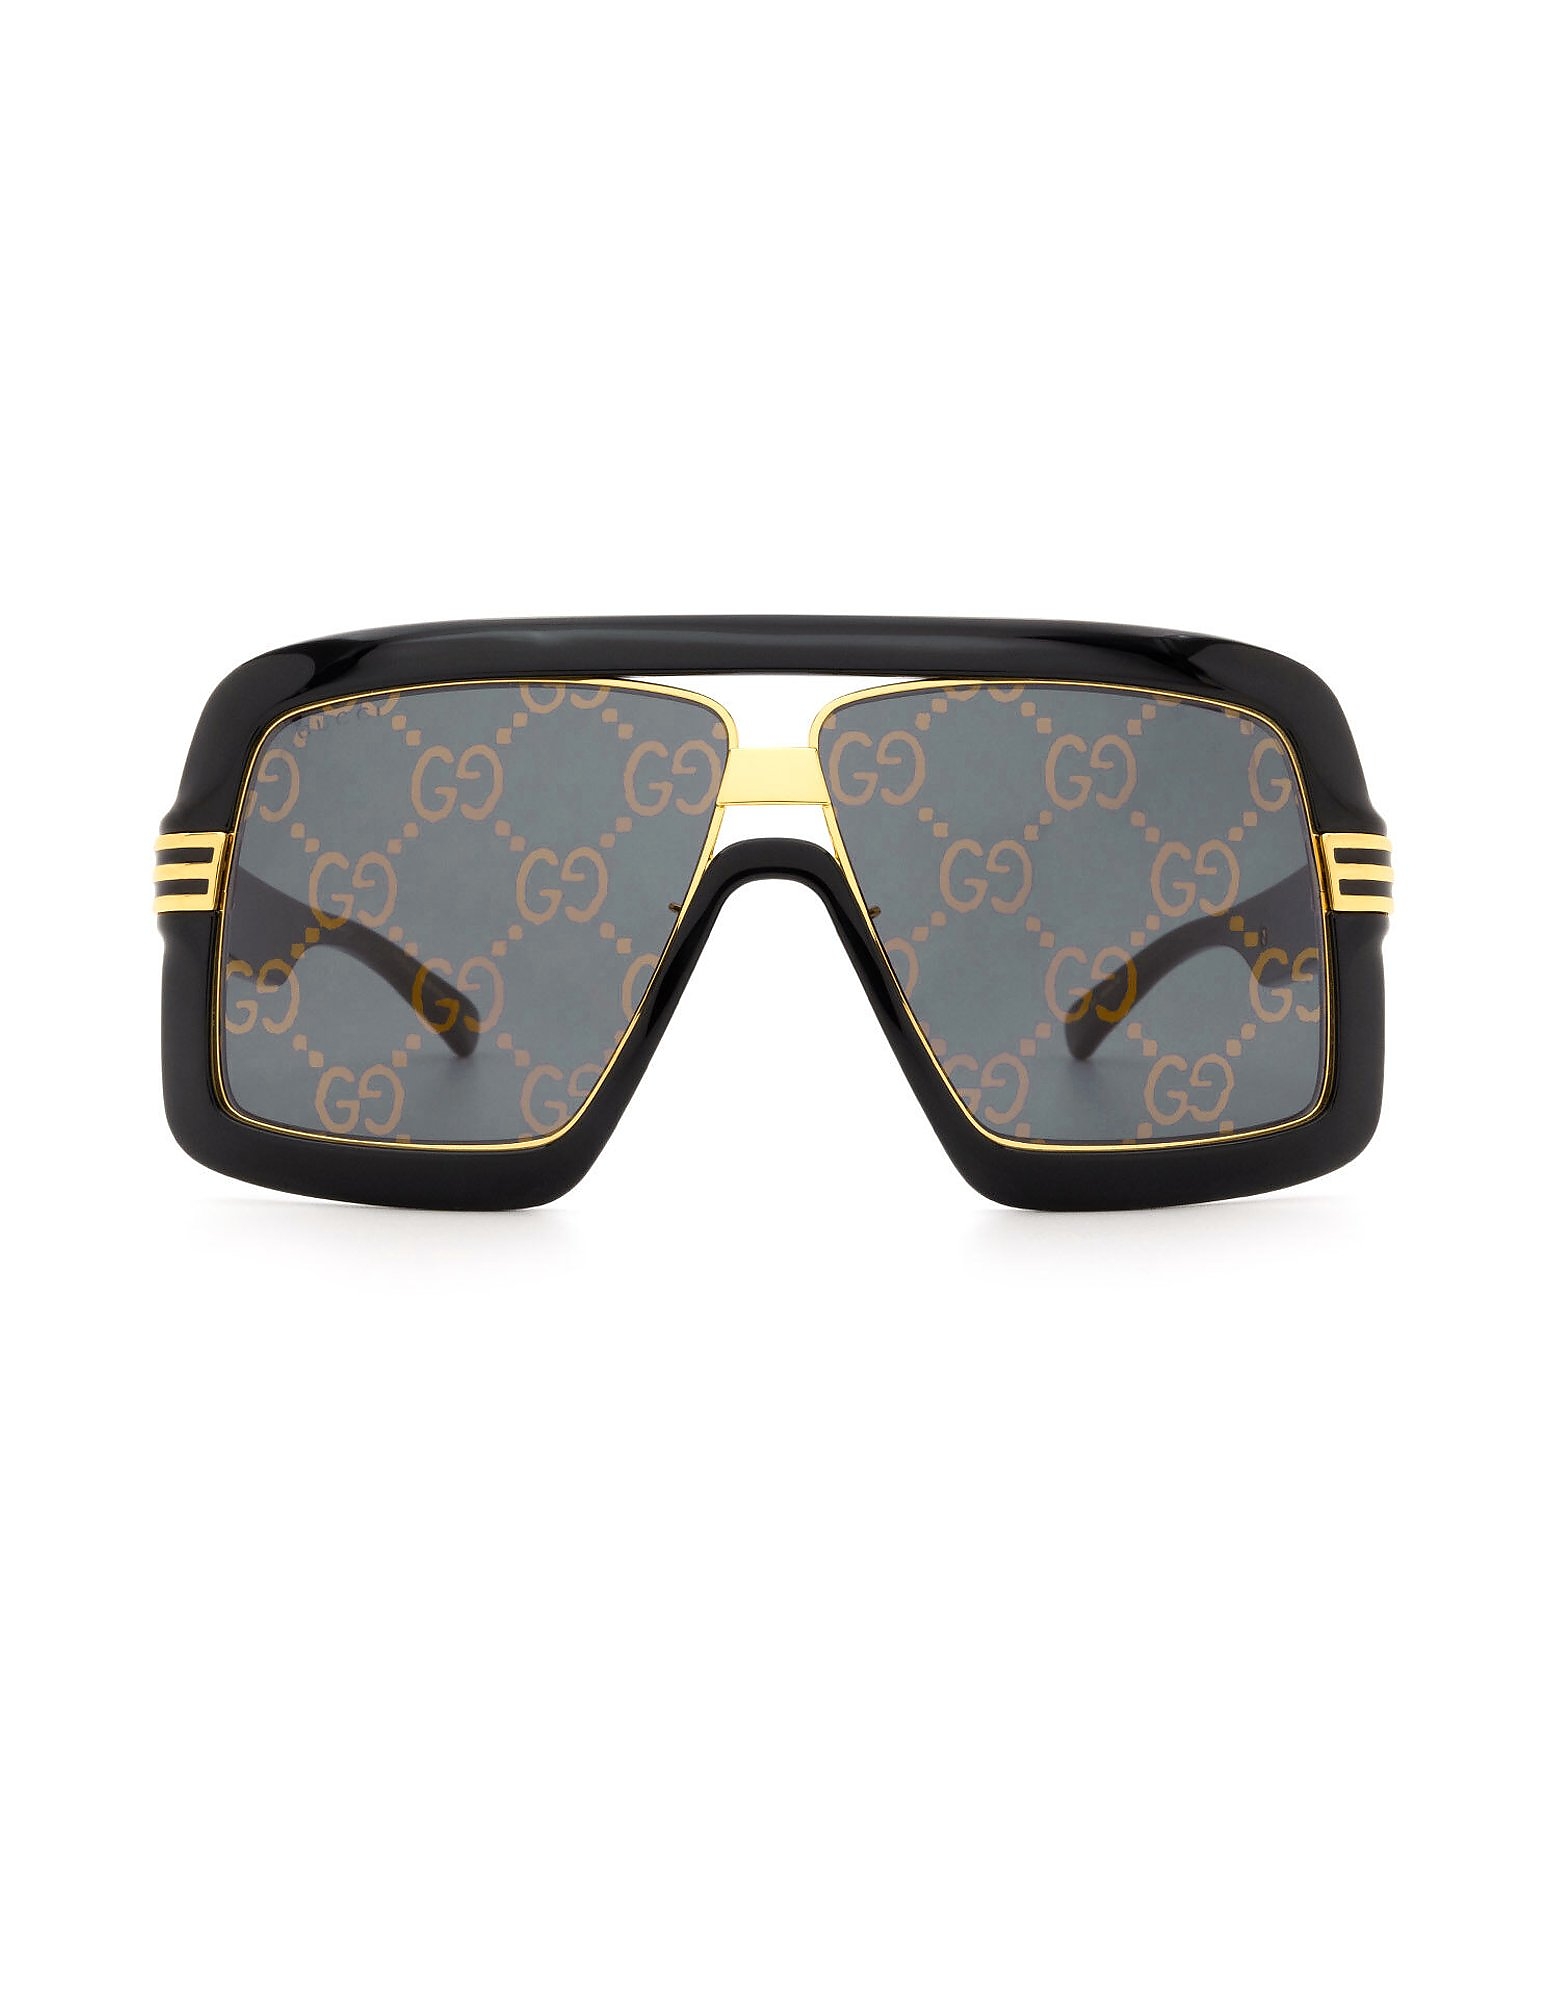 Gucci Sunglasses Black Acetate and Gold Metal Oversized Frame Men's Sunglasses